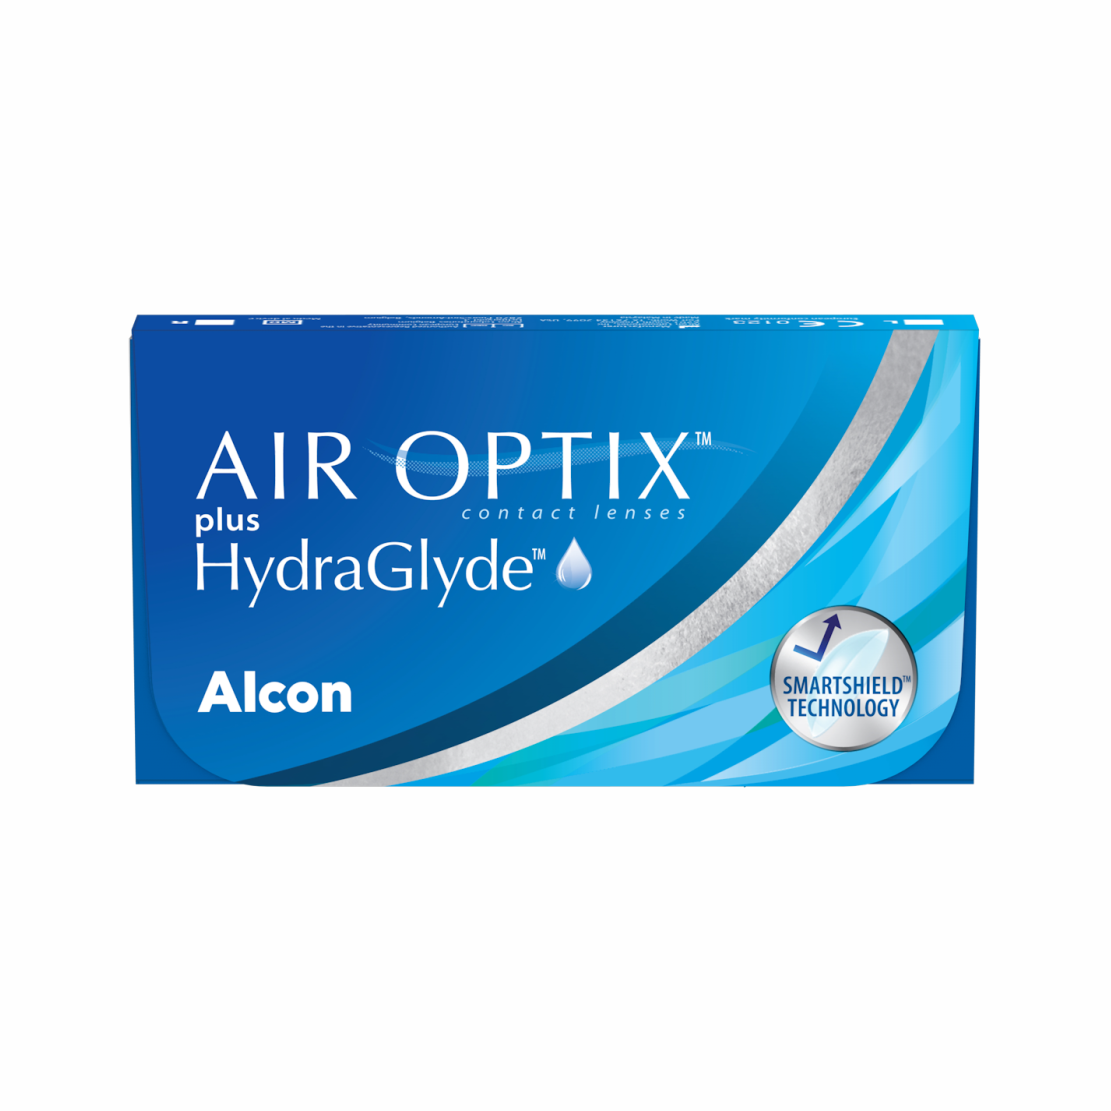 AIR OPTIX plus HydraGlyde, Alcon